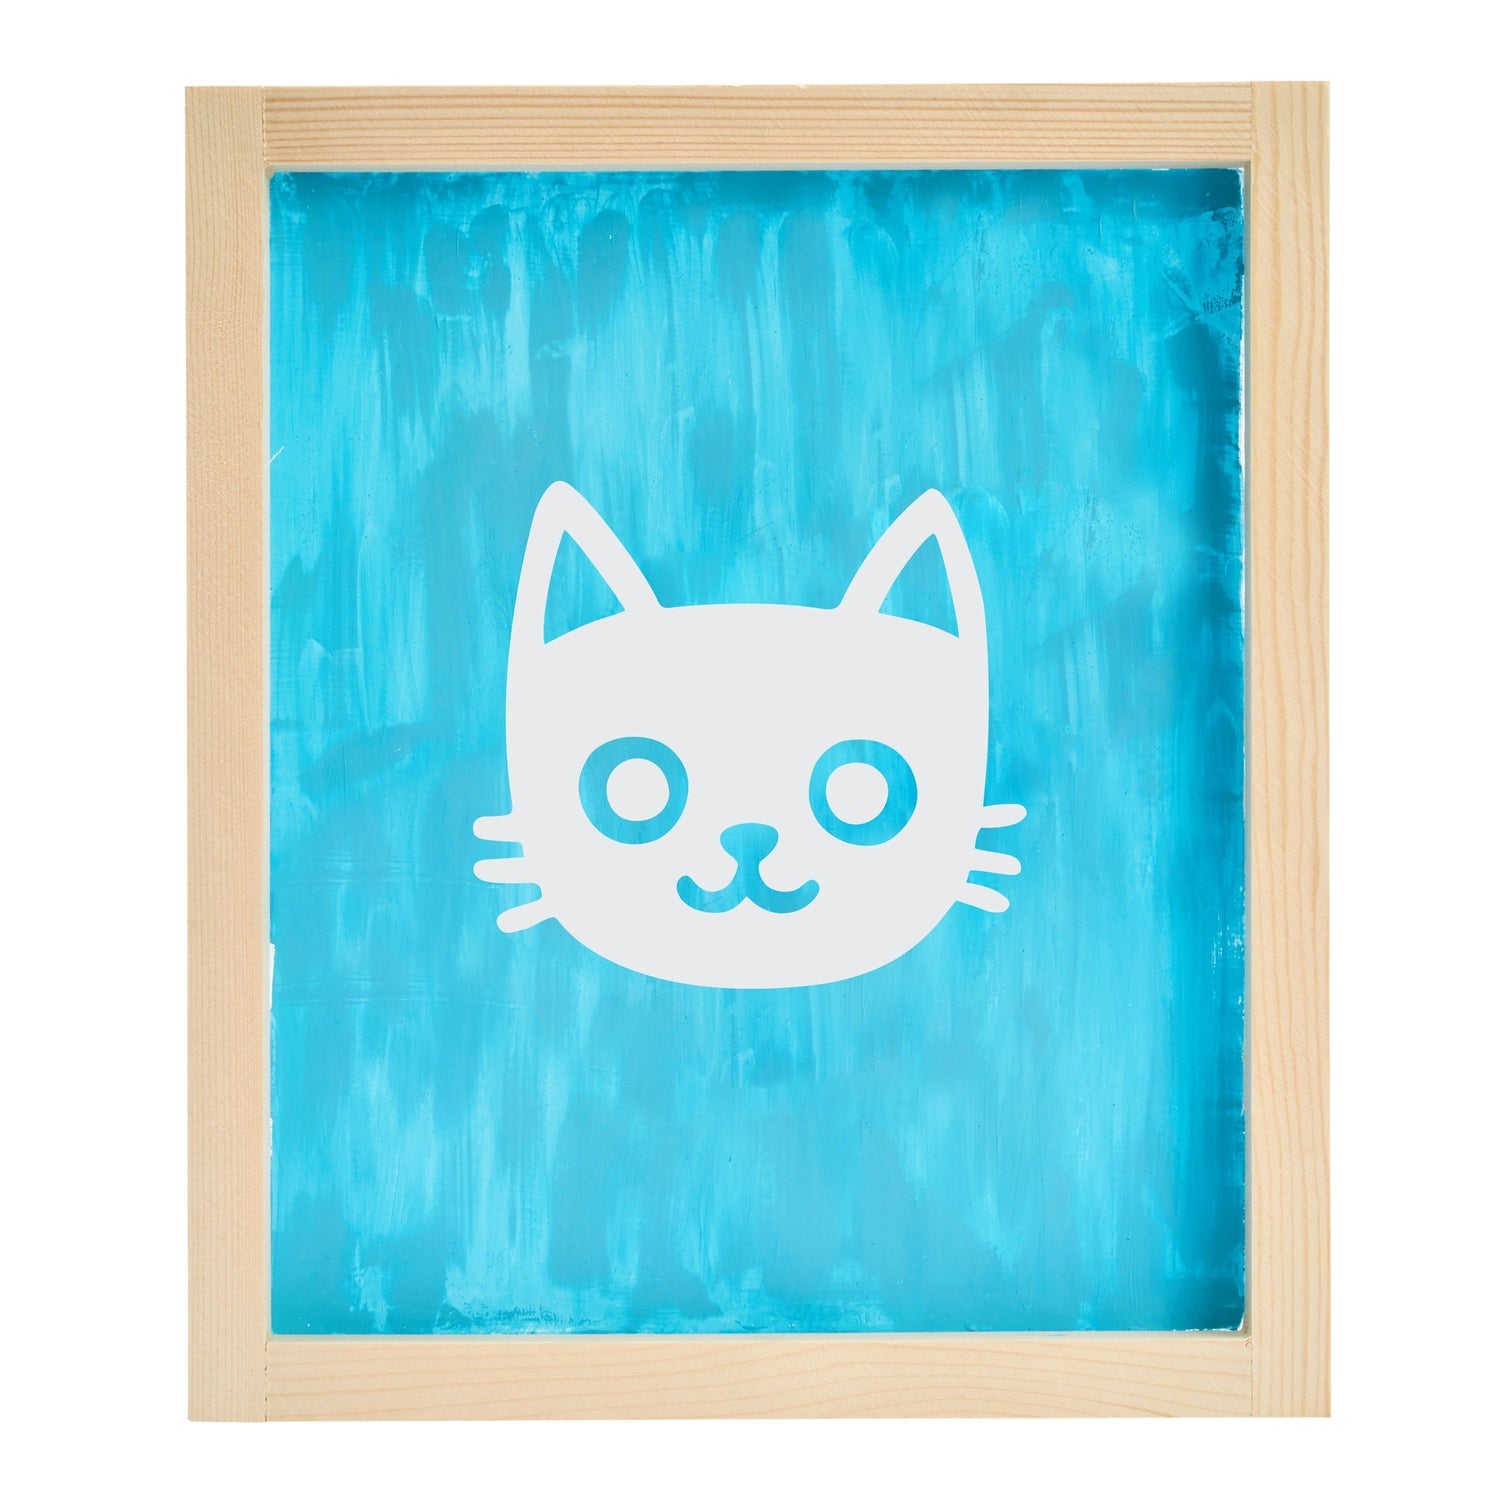 3 Pack Wood Silk Screen Printing Frame Kit for Beginners and Kids, 8x10  Wood Frame, 110 White Mesh